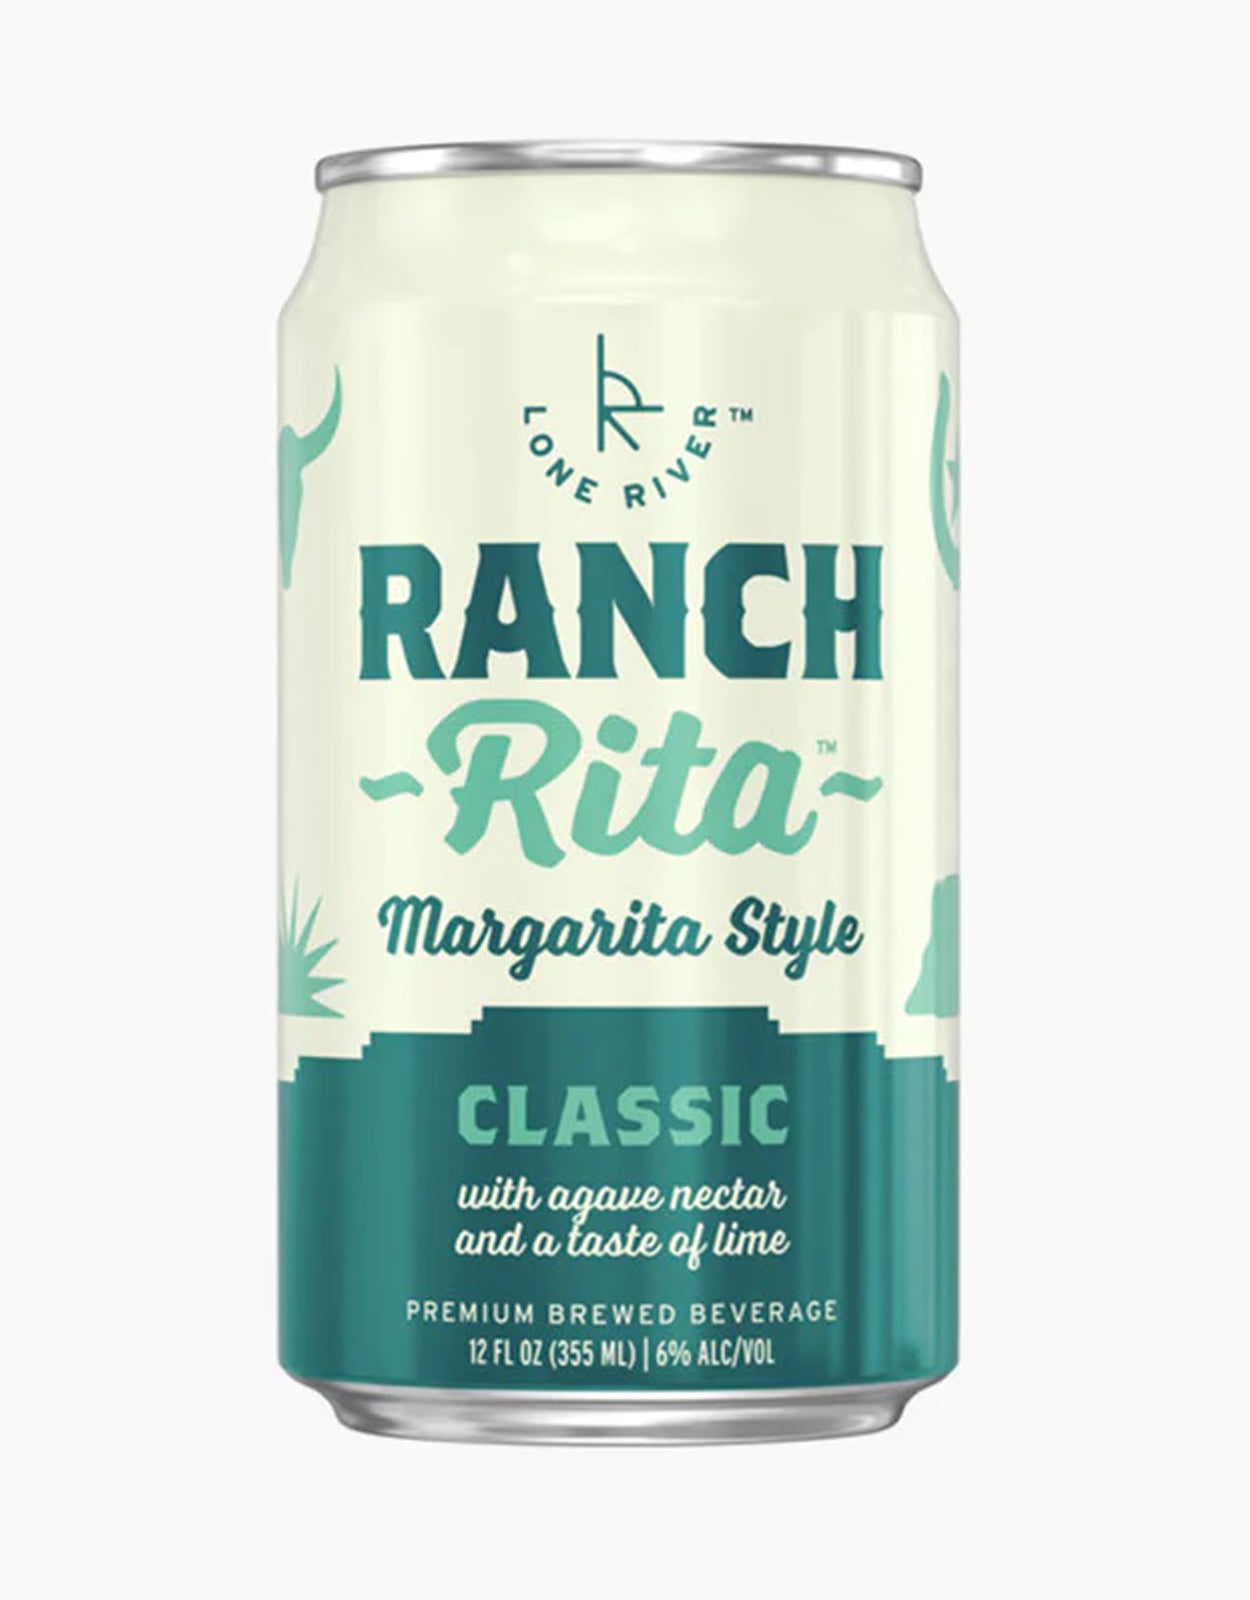 Ranch Rita Margarita Classic 355 ml - 4 Cans